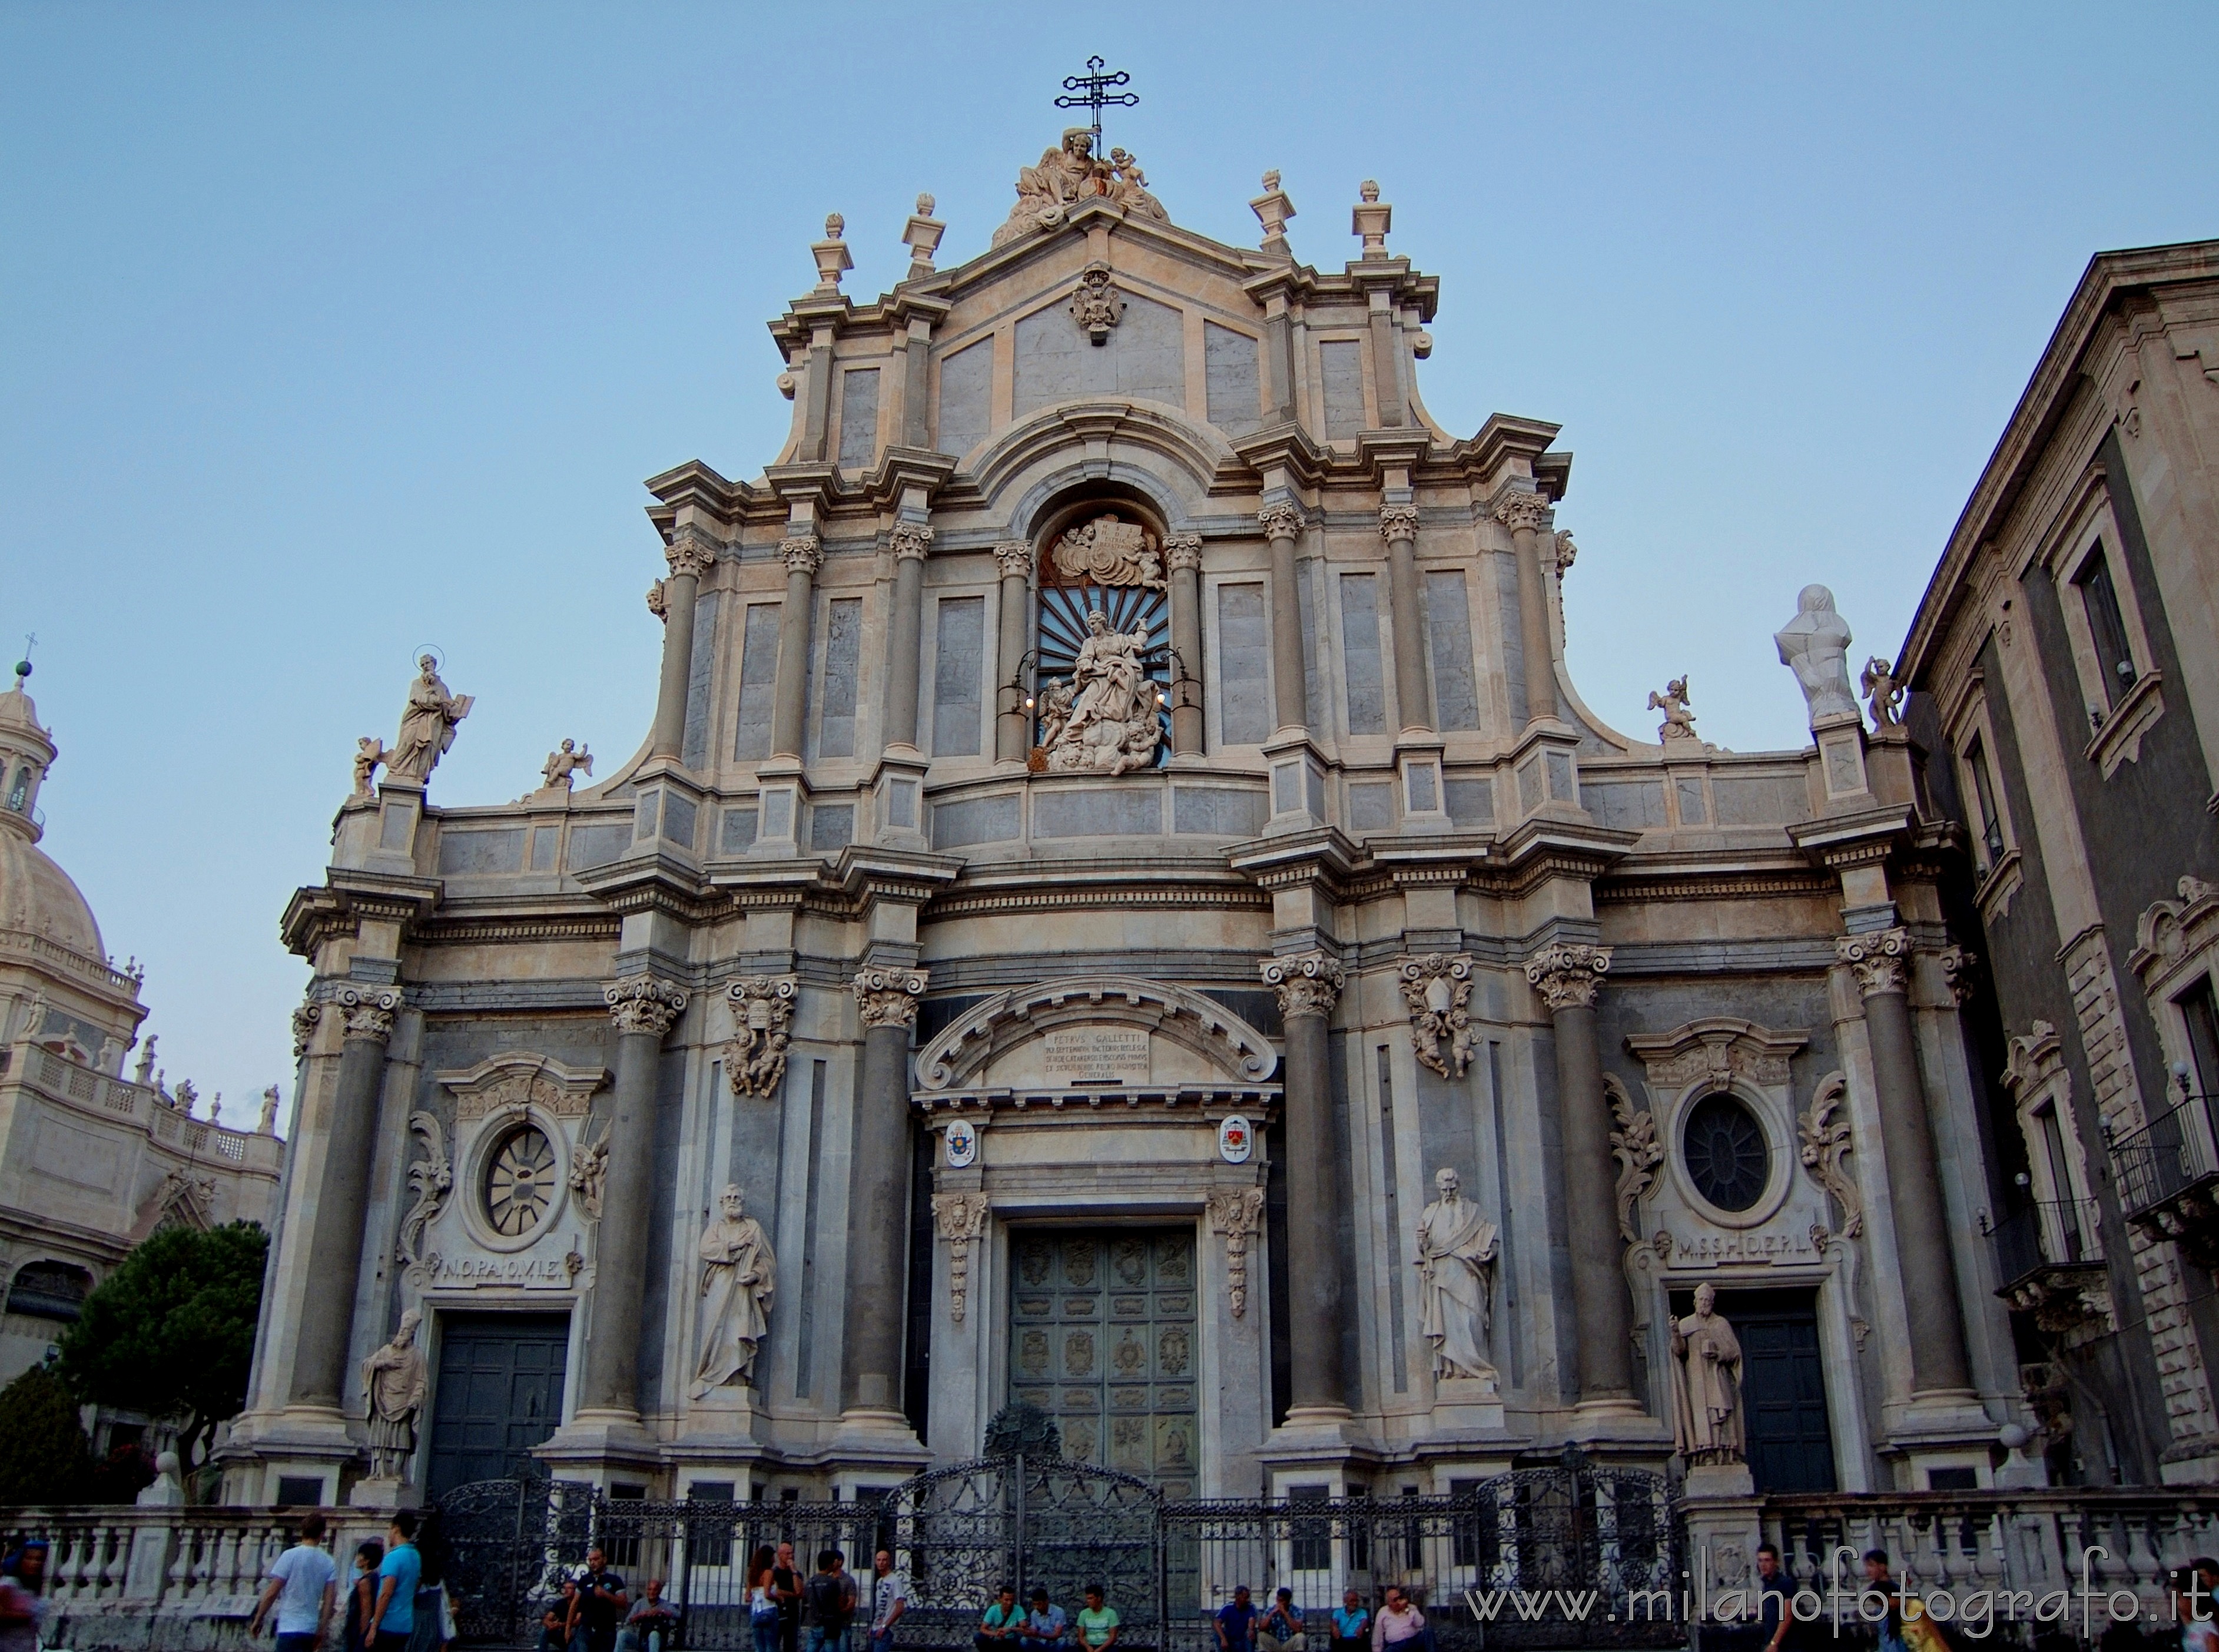 Catania: Facciata del Duomo all'imbrunire - Catania